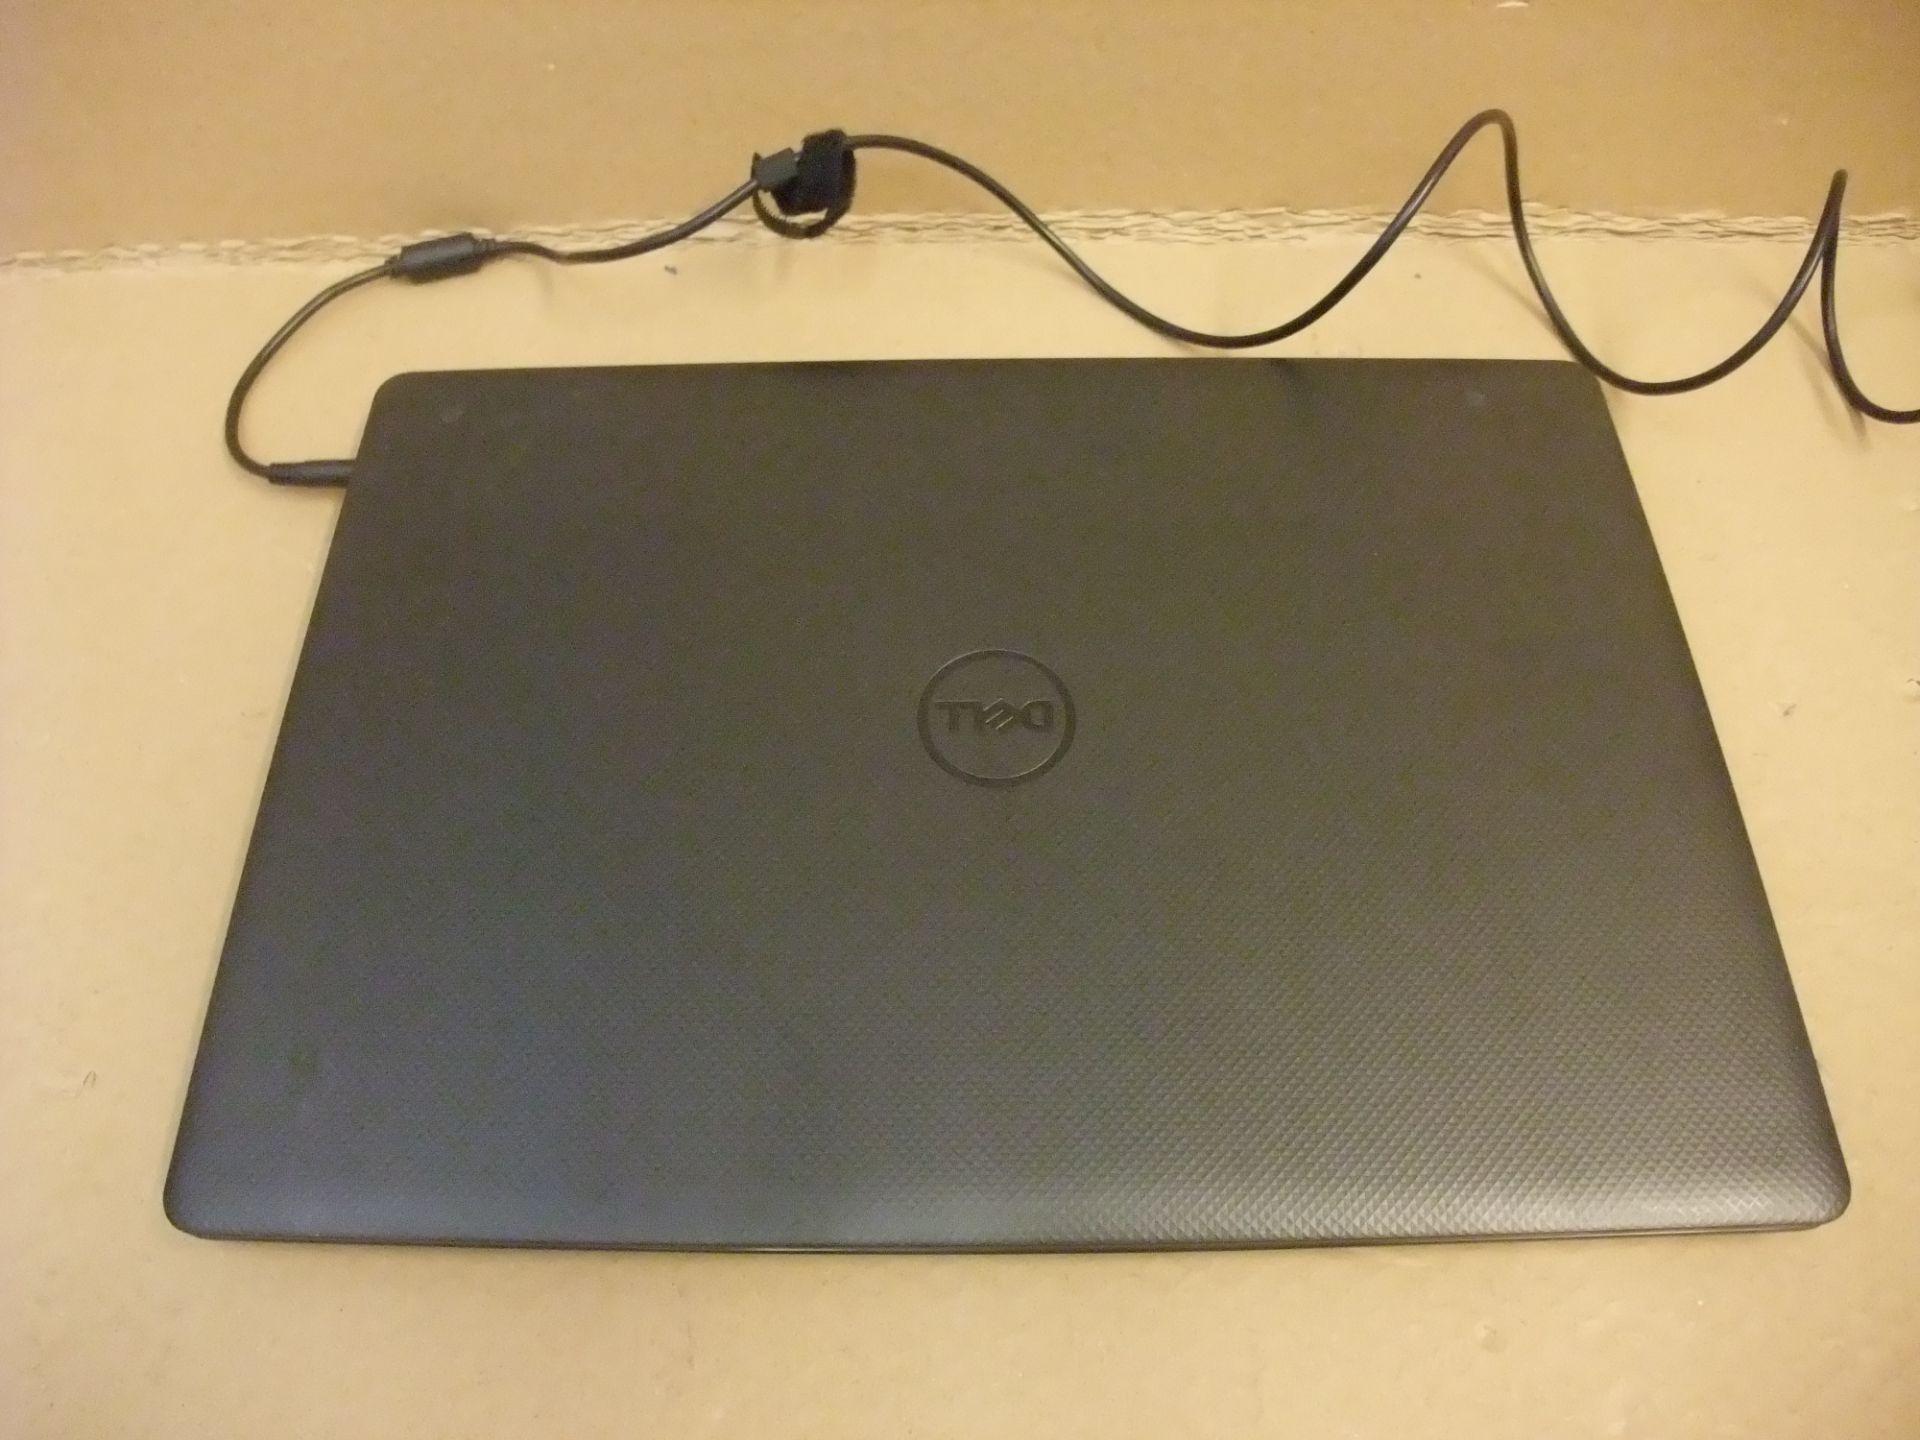 Dell Vostro 3590 Laptop - i5-10210U, 8Gb RAM, 256Gb M2 drive, Windows 10 Pro (PSU & power lead